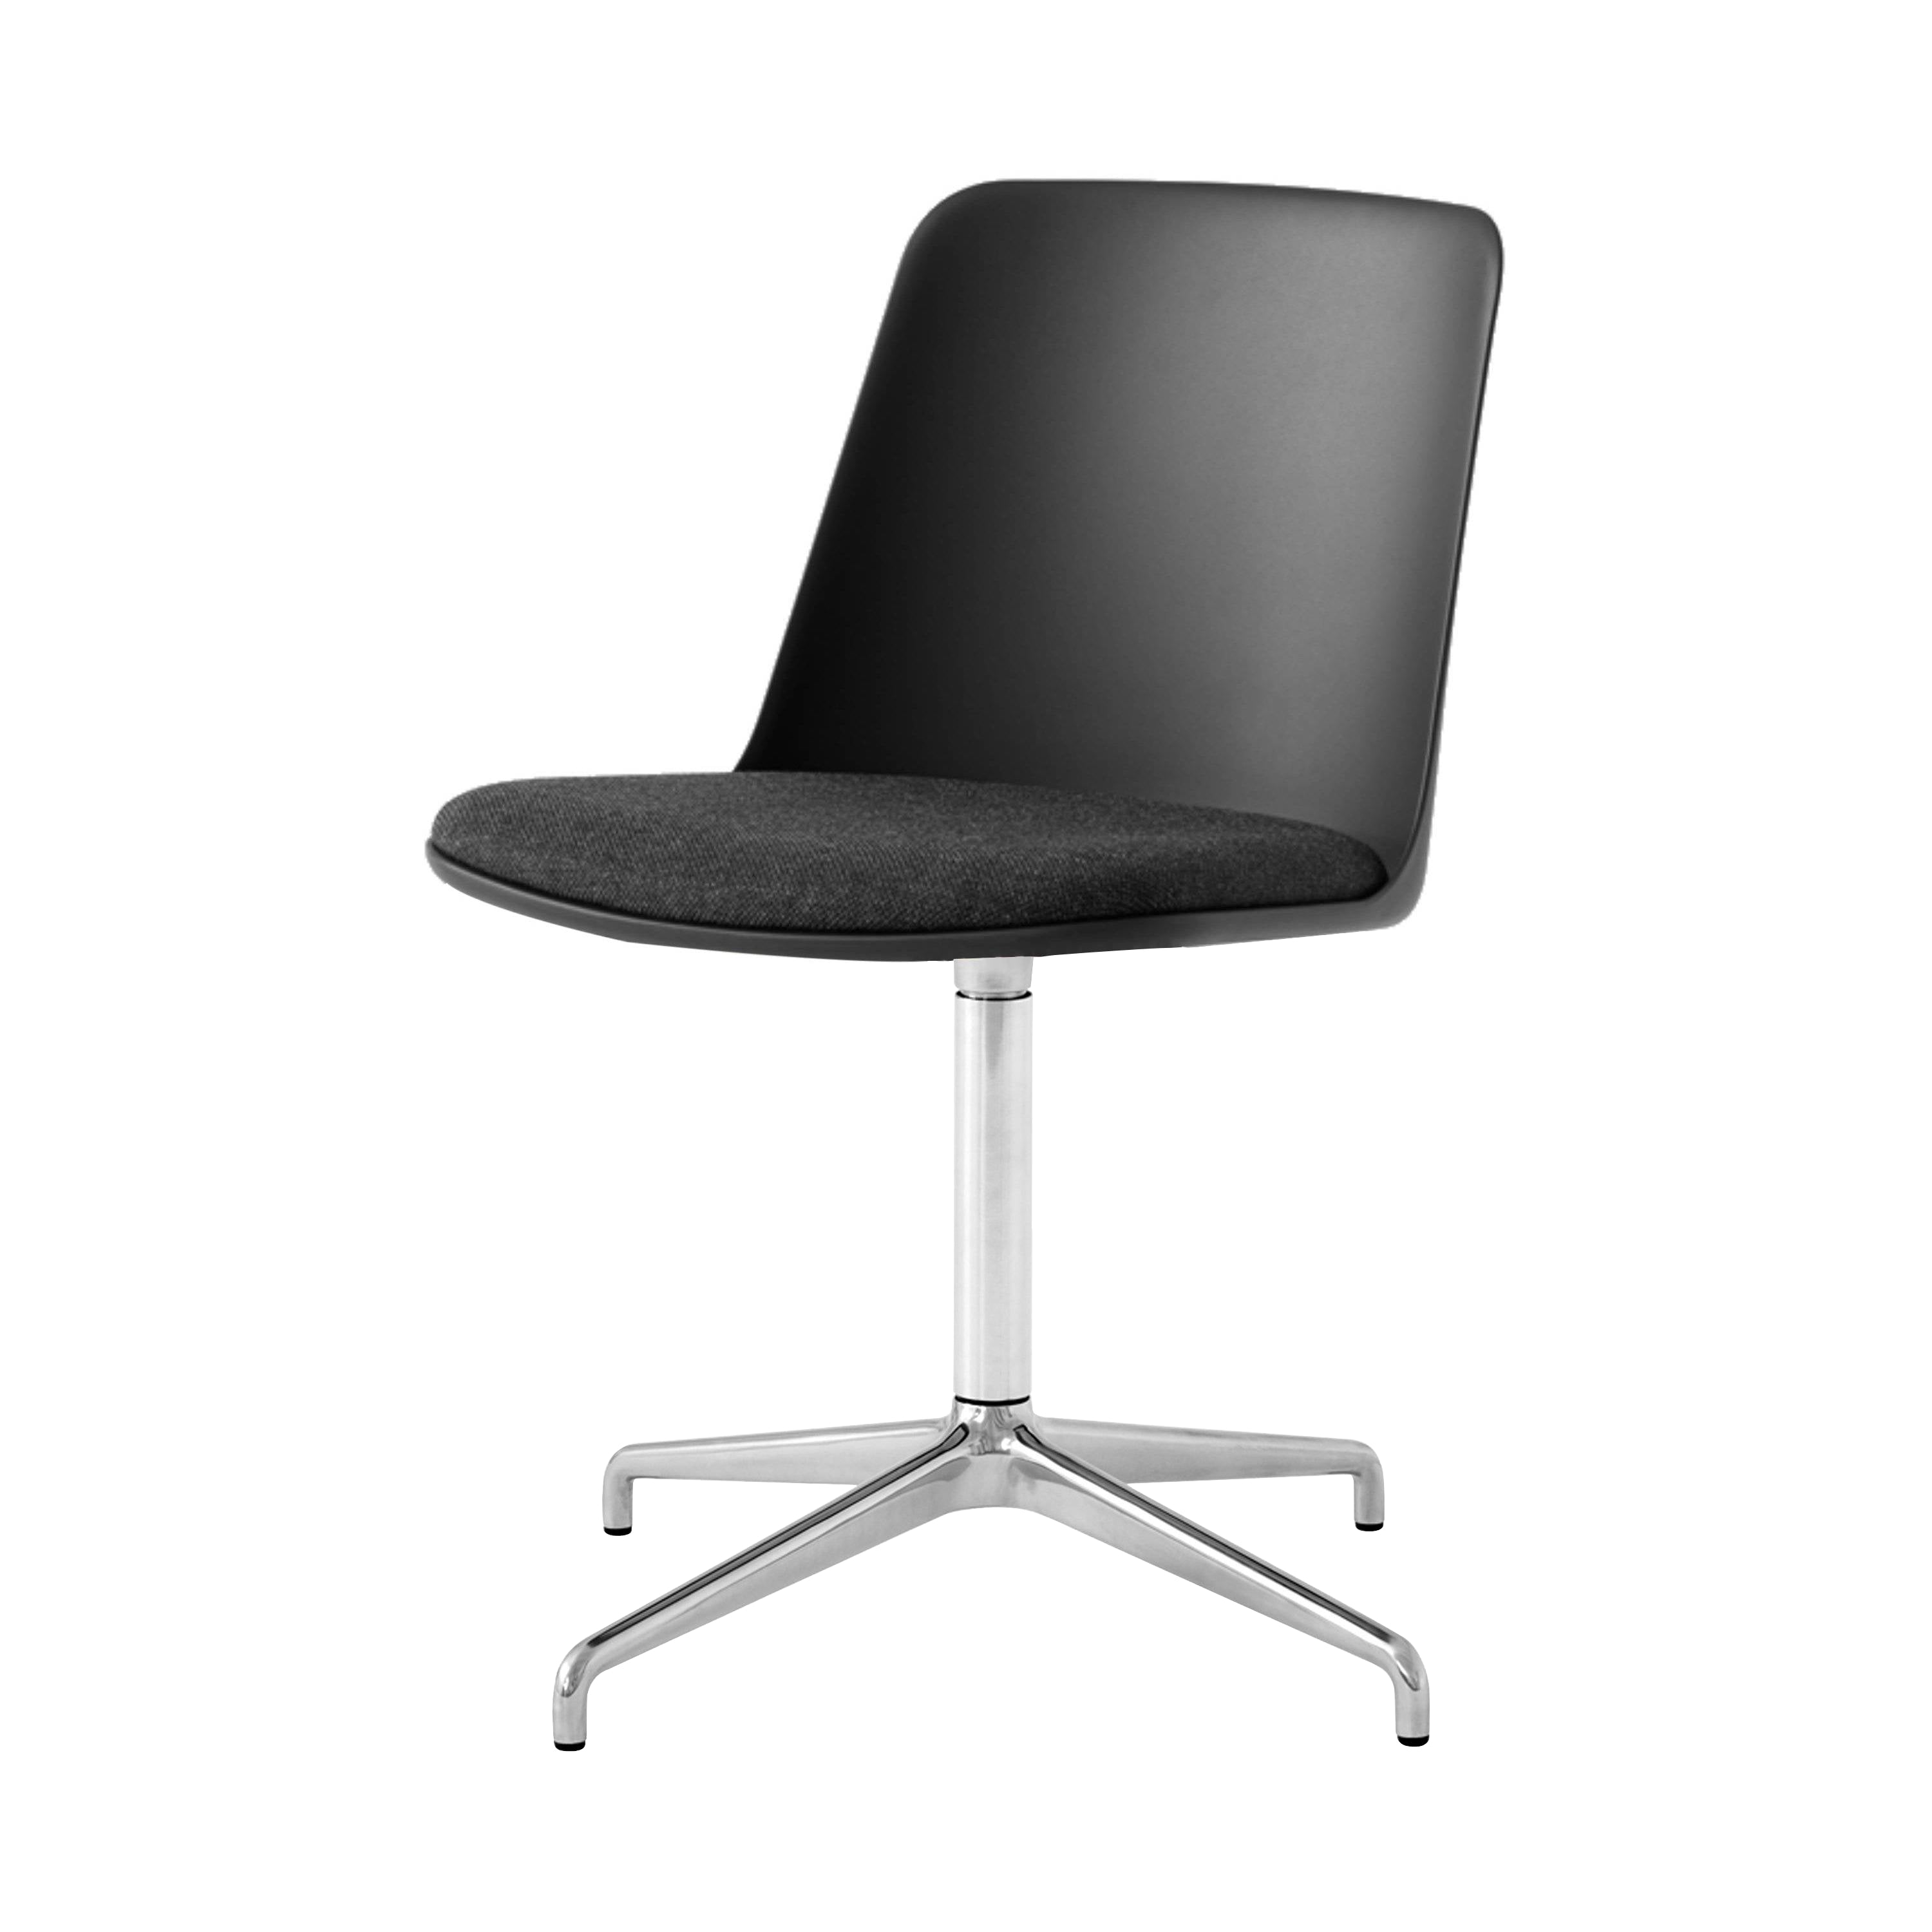 Rely Chair HW12: Aluminum Base + Black